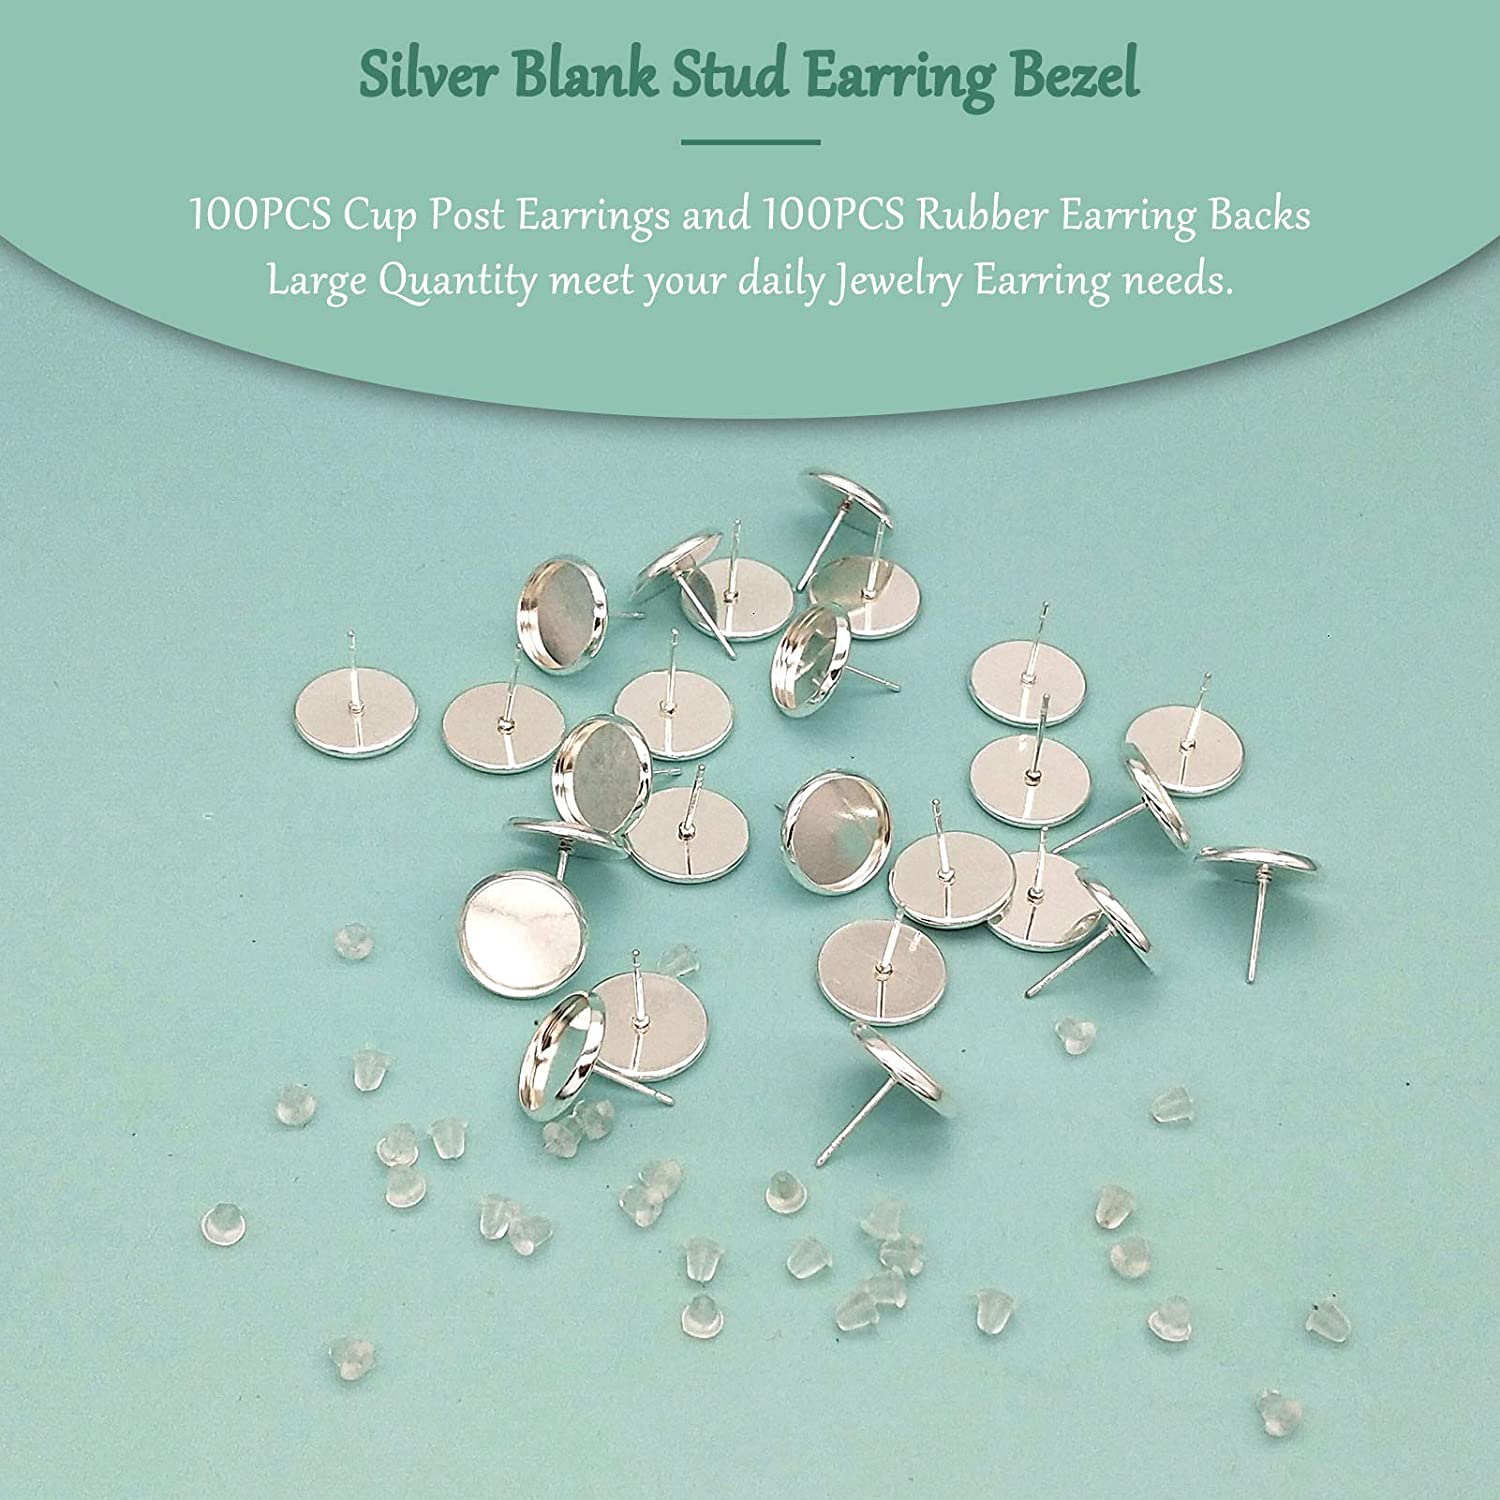 Blank Stud Earring Bezel Silver,200Pcs Stud Earring Kit Includes 100Pcs Cup Post Earrings and 100Pcs Rubber Earring Backs for DIY Jewelry Findings,Earring Making Supplies - image 2 of 5